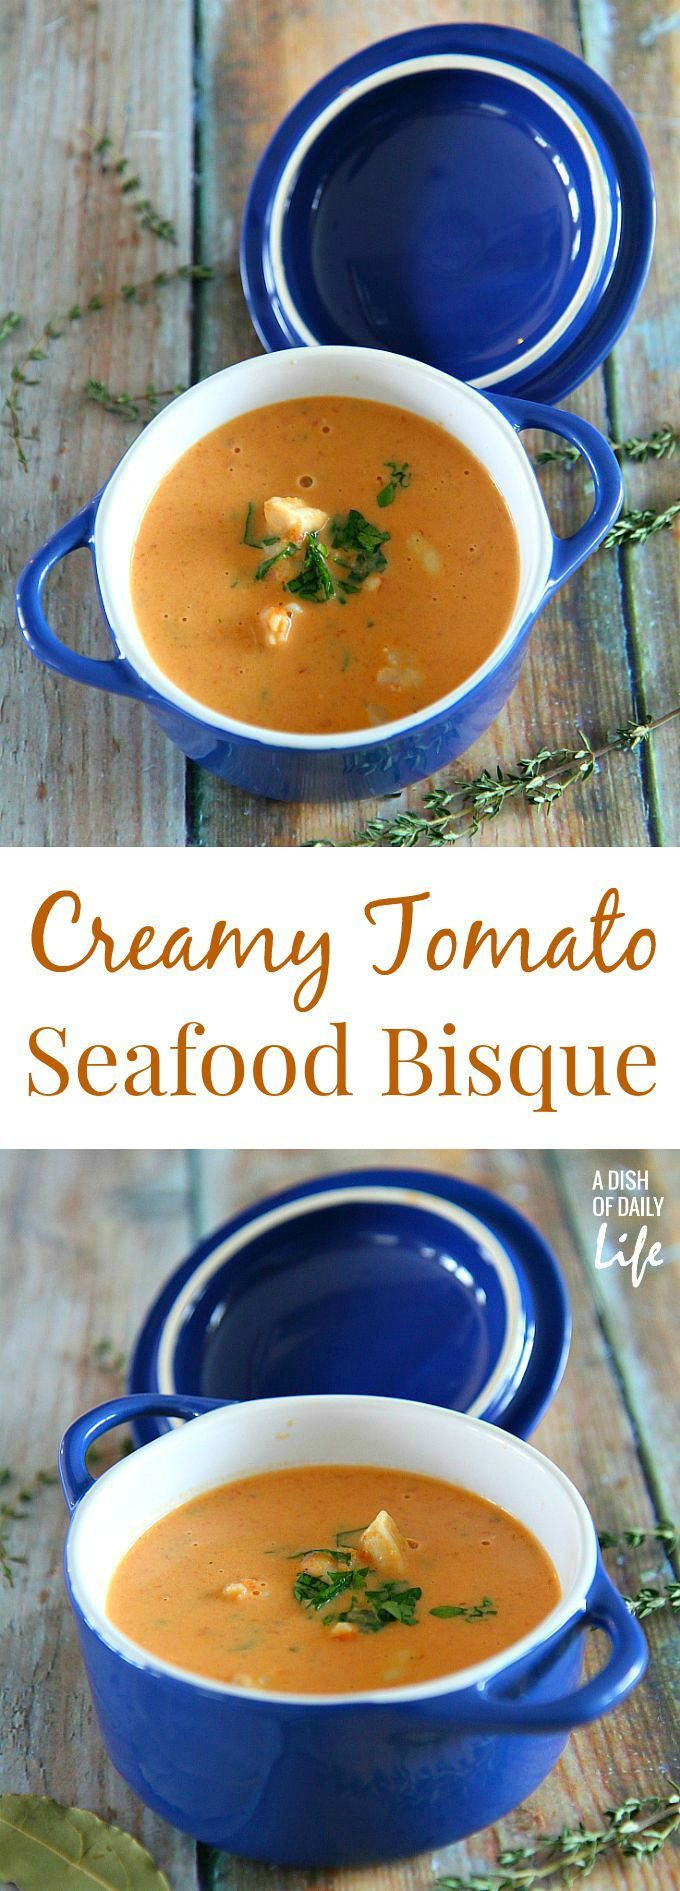 Creamy Seafood Bisque Recipe
 Creamy Tomato Seafood Bisque Recipe